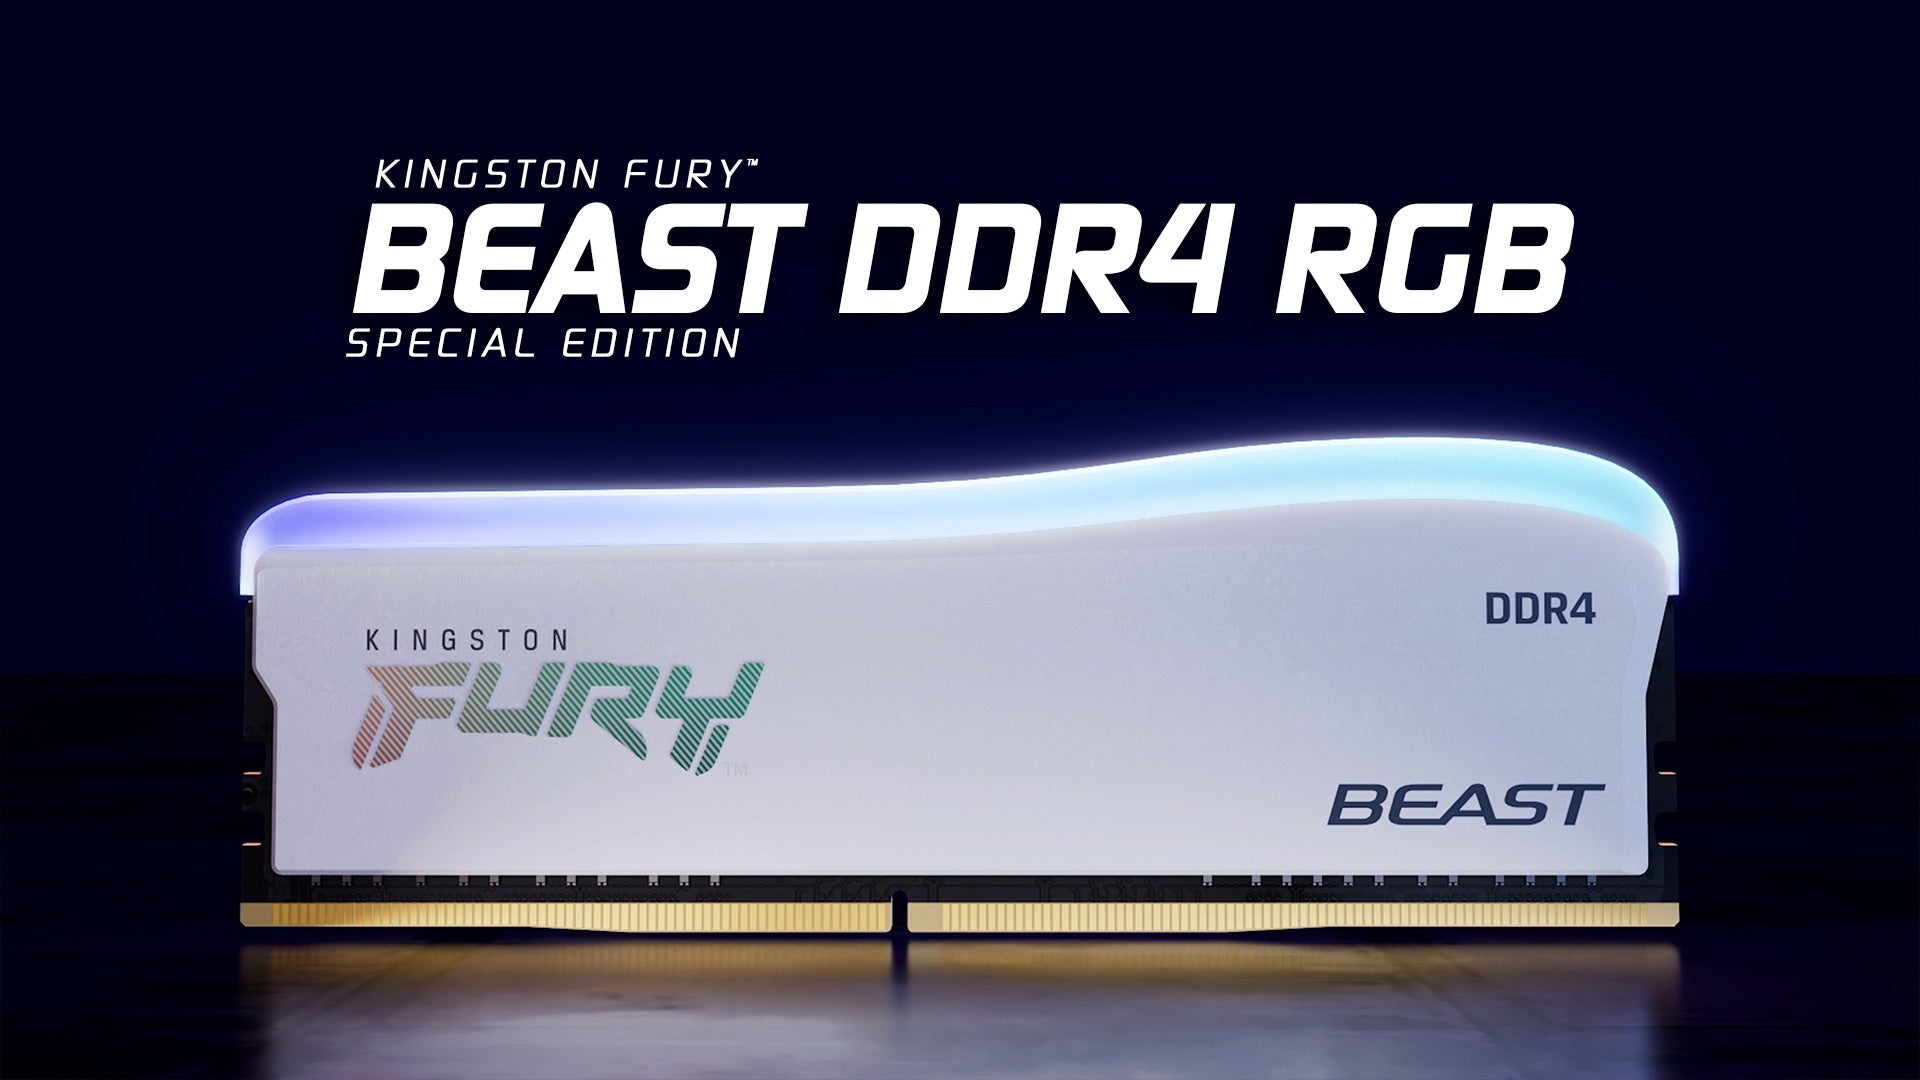 Beast DDR4 RGB Special Edition Desktop Memory